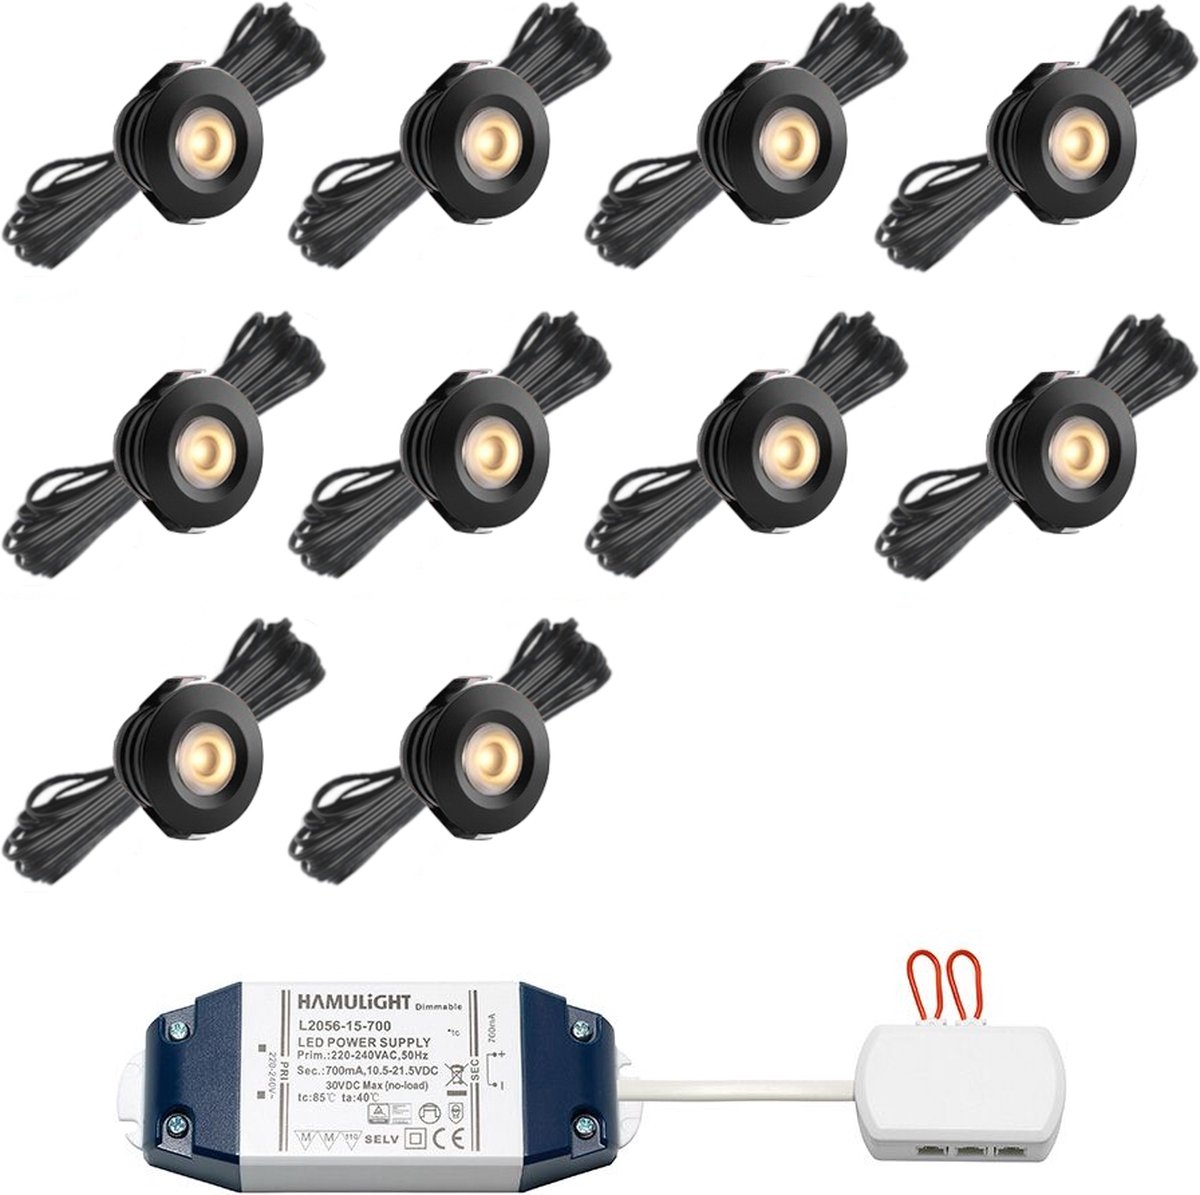 LED inbouwspot Pals bas zwart - inclusief trafo - inbouwspots / downlights / plafondspots / led spot / 3W / dimbaar / warm wit / rond / 230V / IP44 / - set van 10 stuks